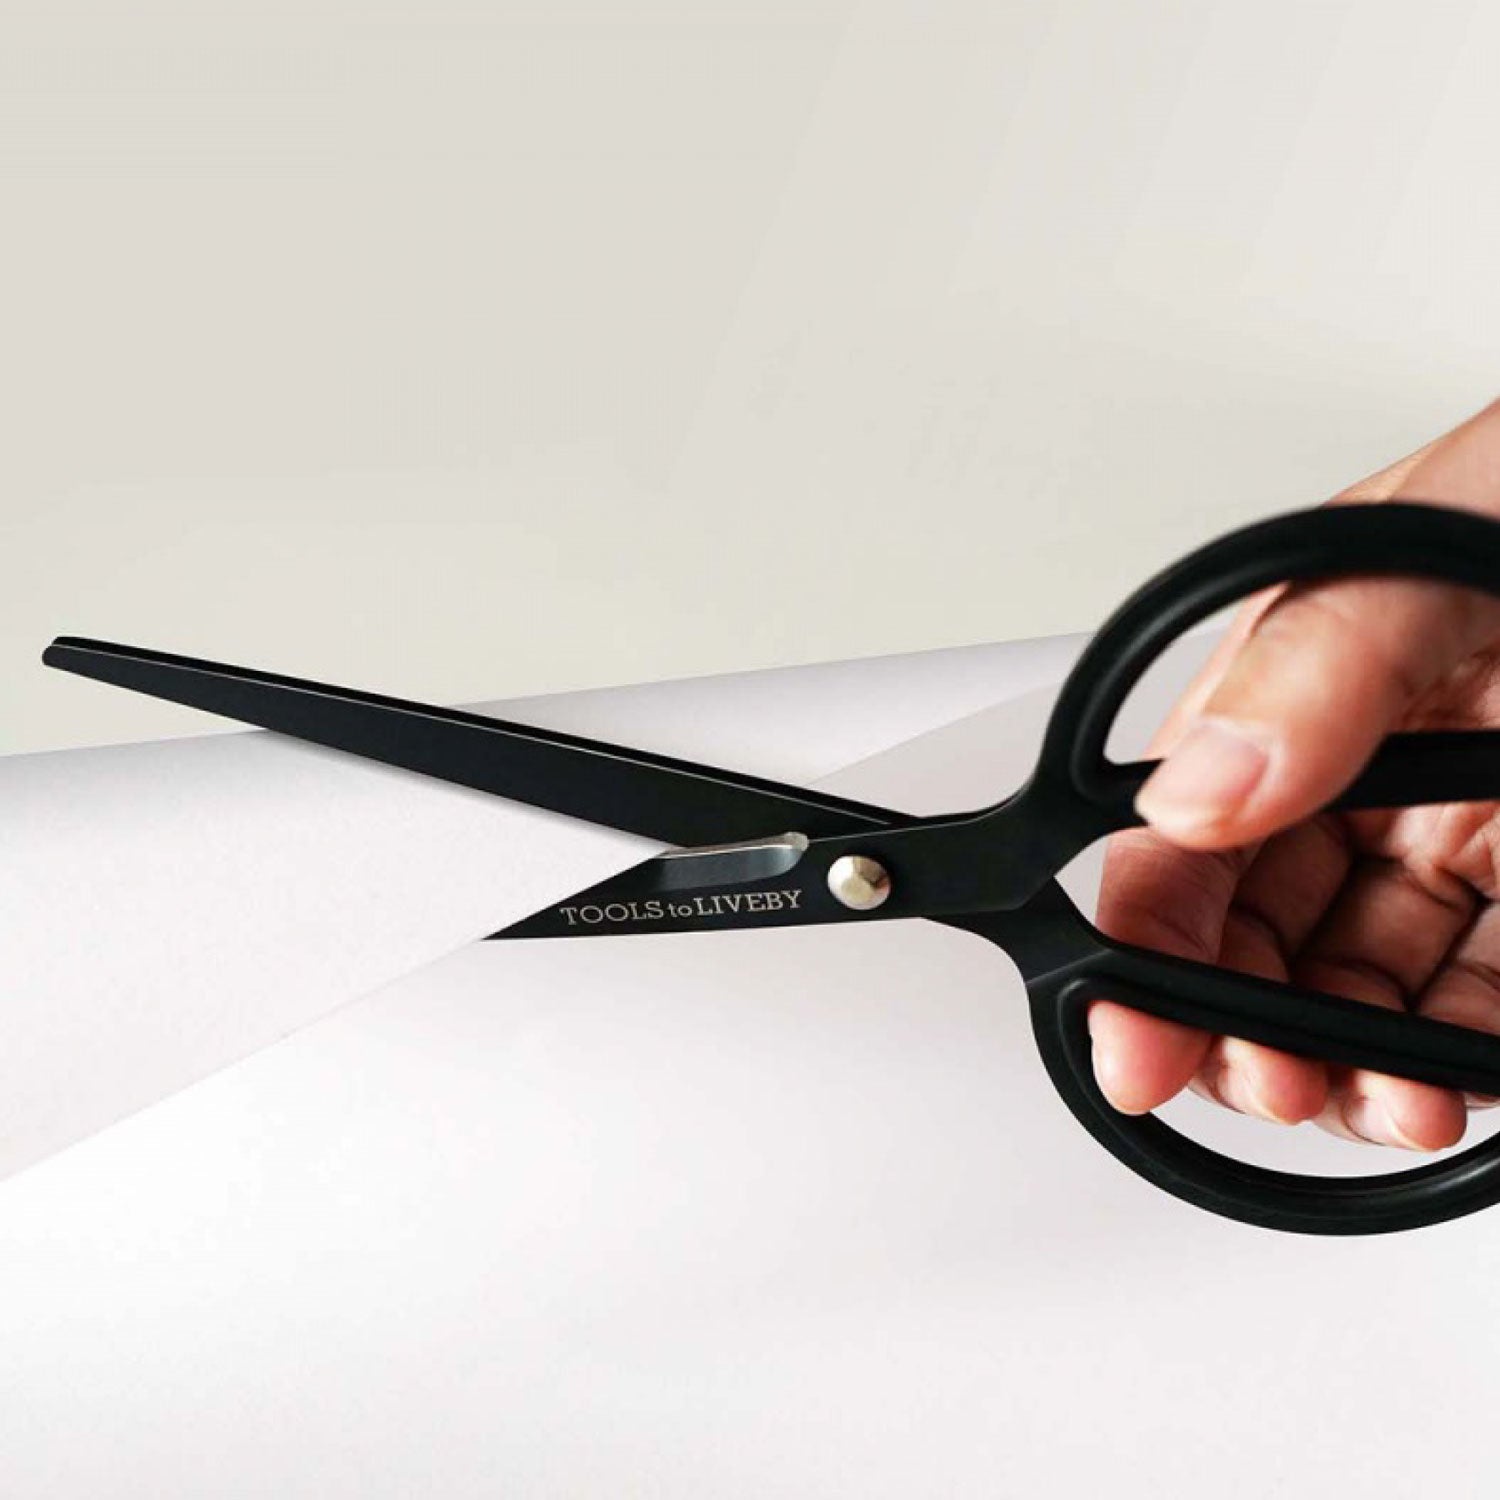 Tools to Liveby - Scissors - Medium - Black